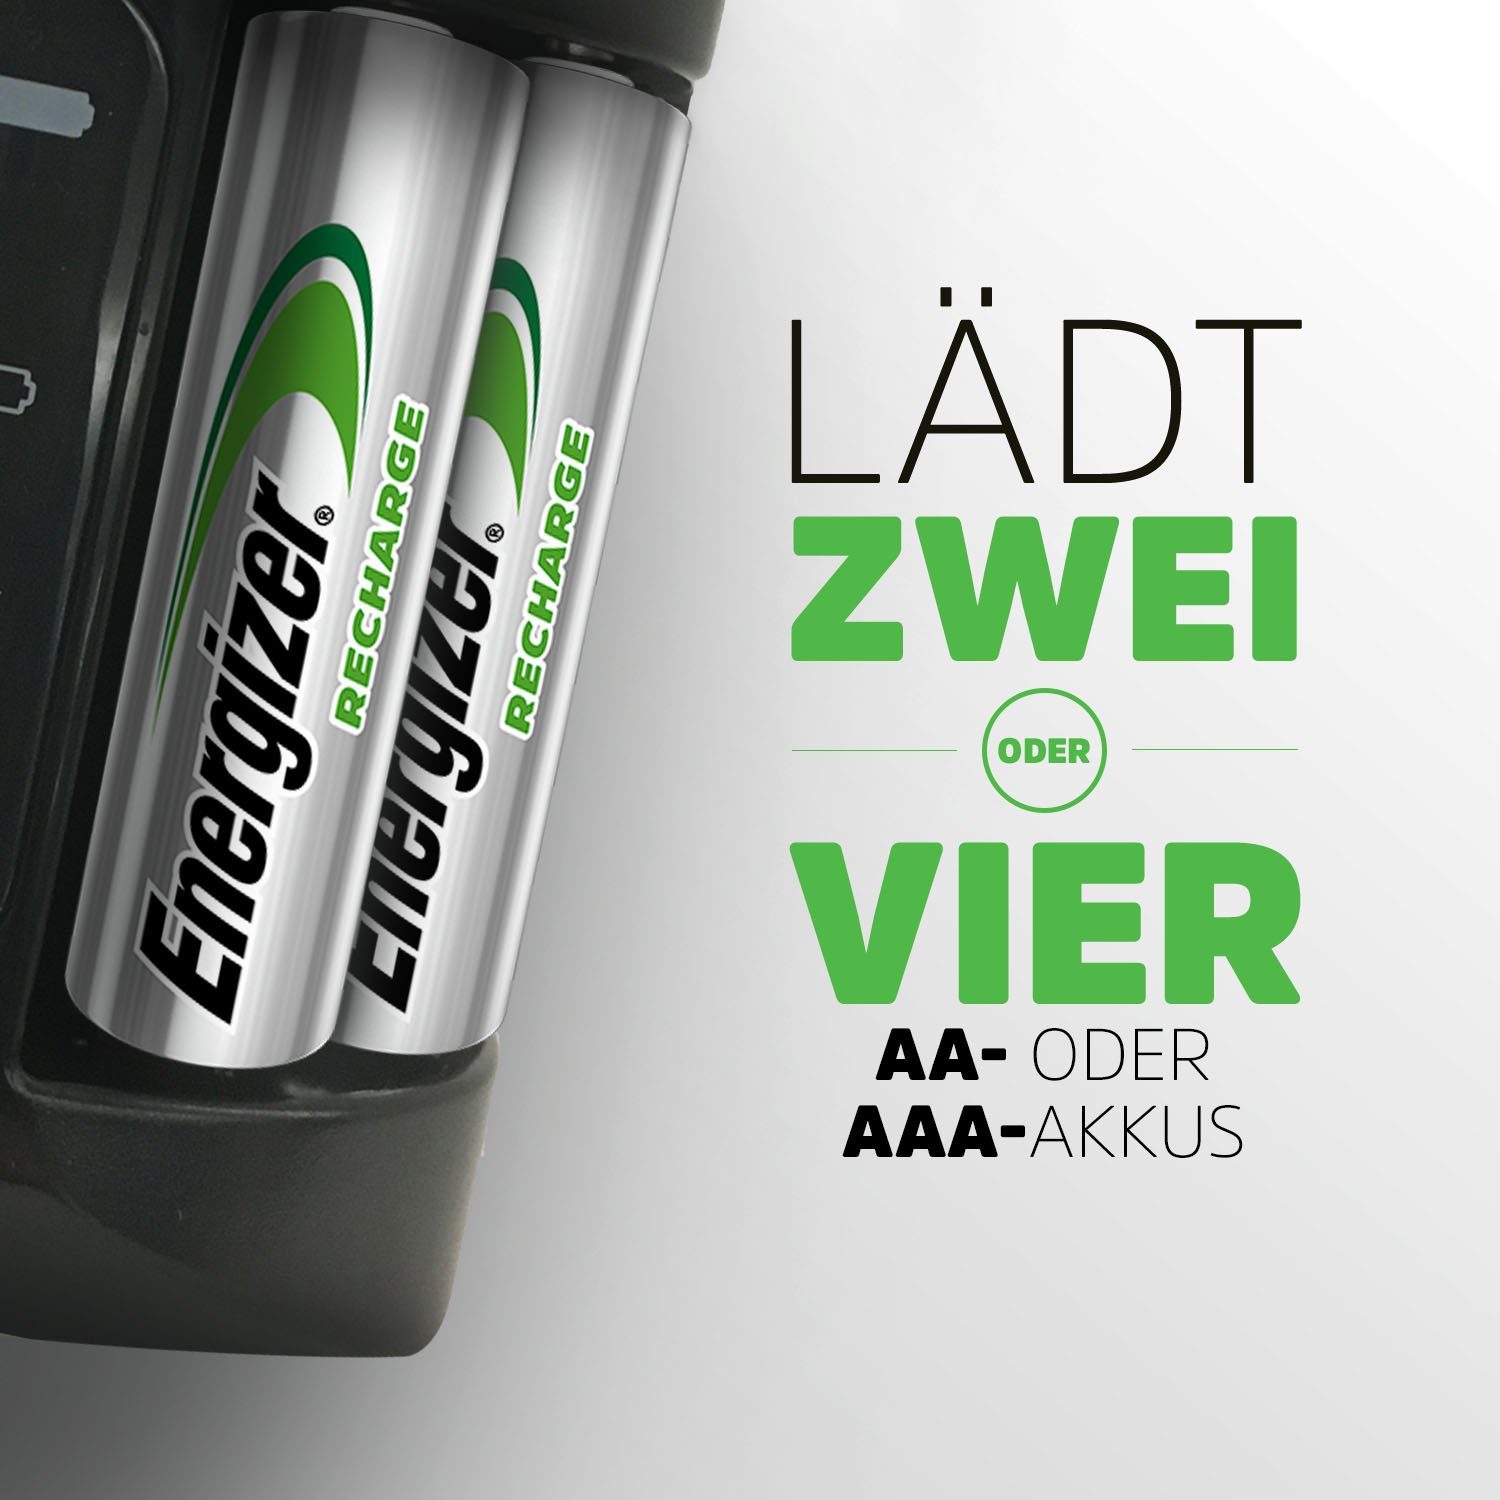 Energizer Pro Charger +4 AA mAh 2000 Batterie-Ladegerät